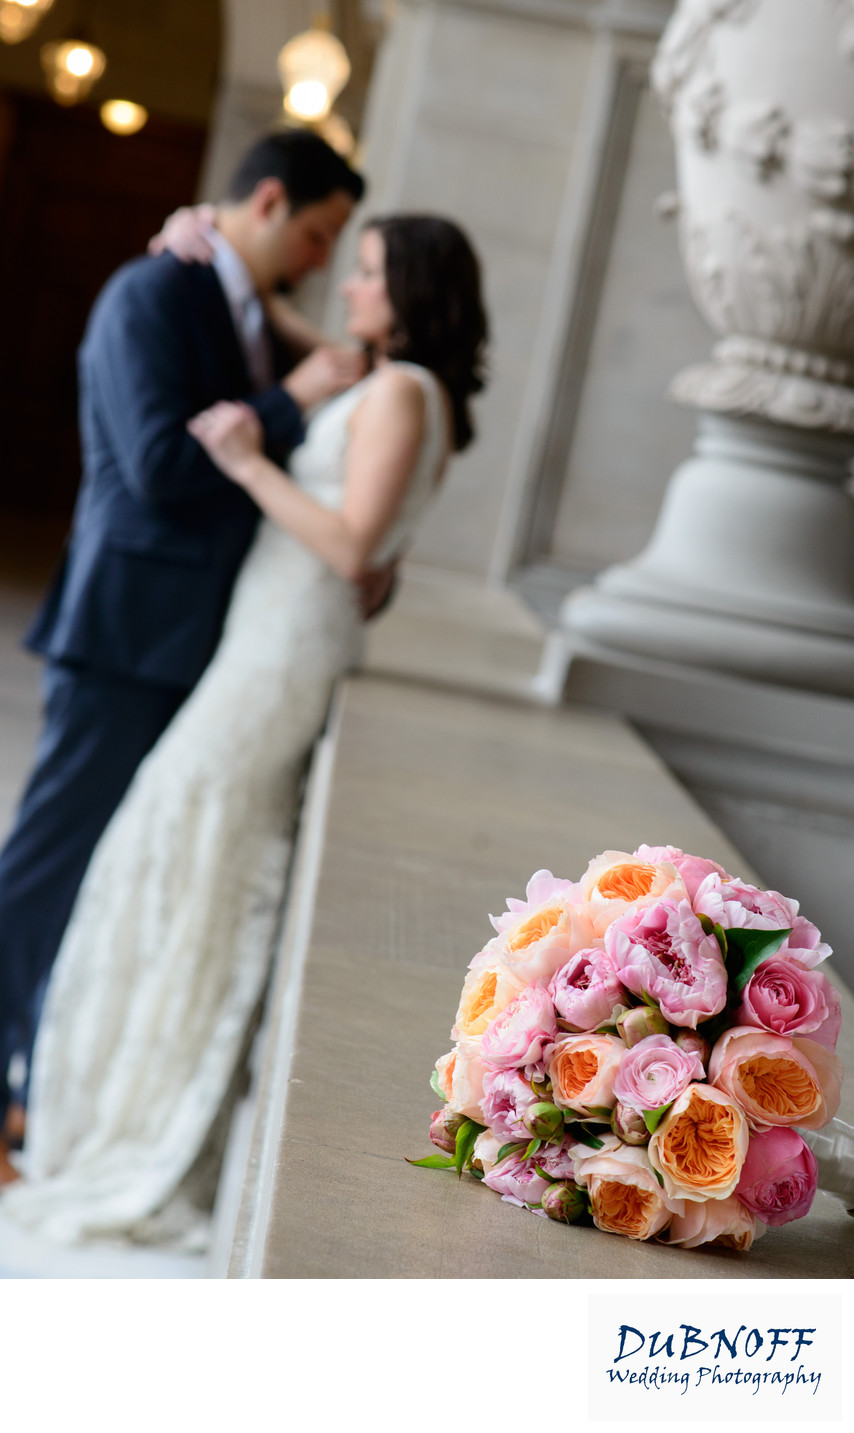 San Francisco City Hall Wedding Photographer - Bouquet Focus